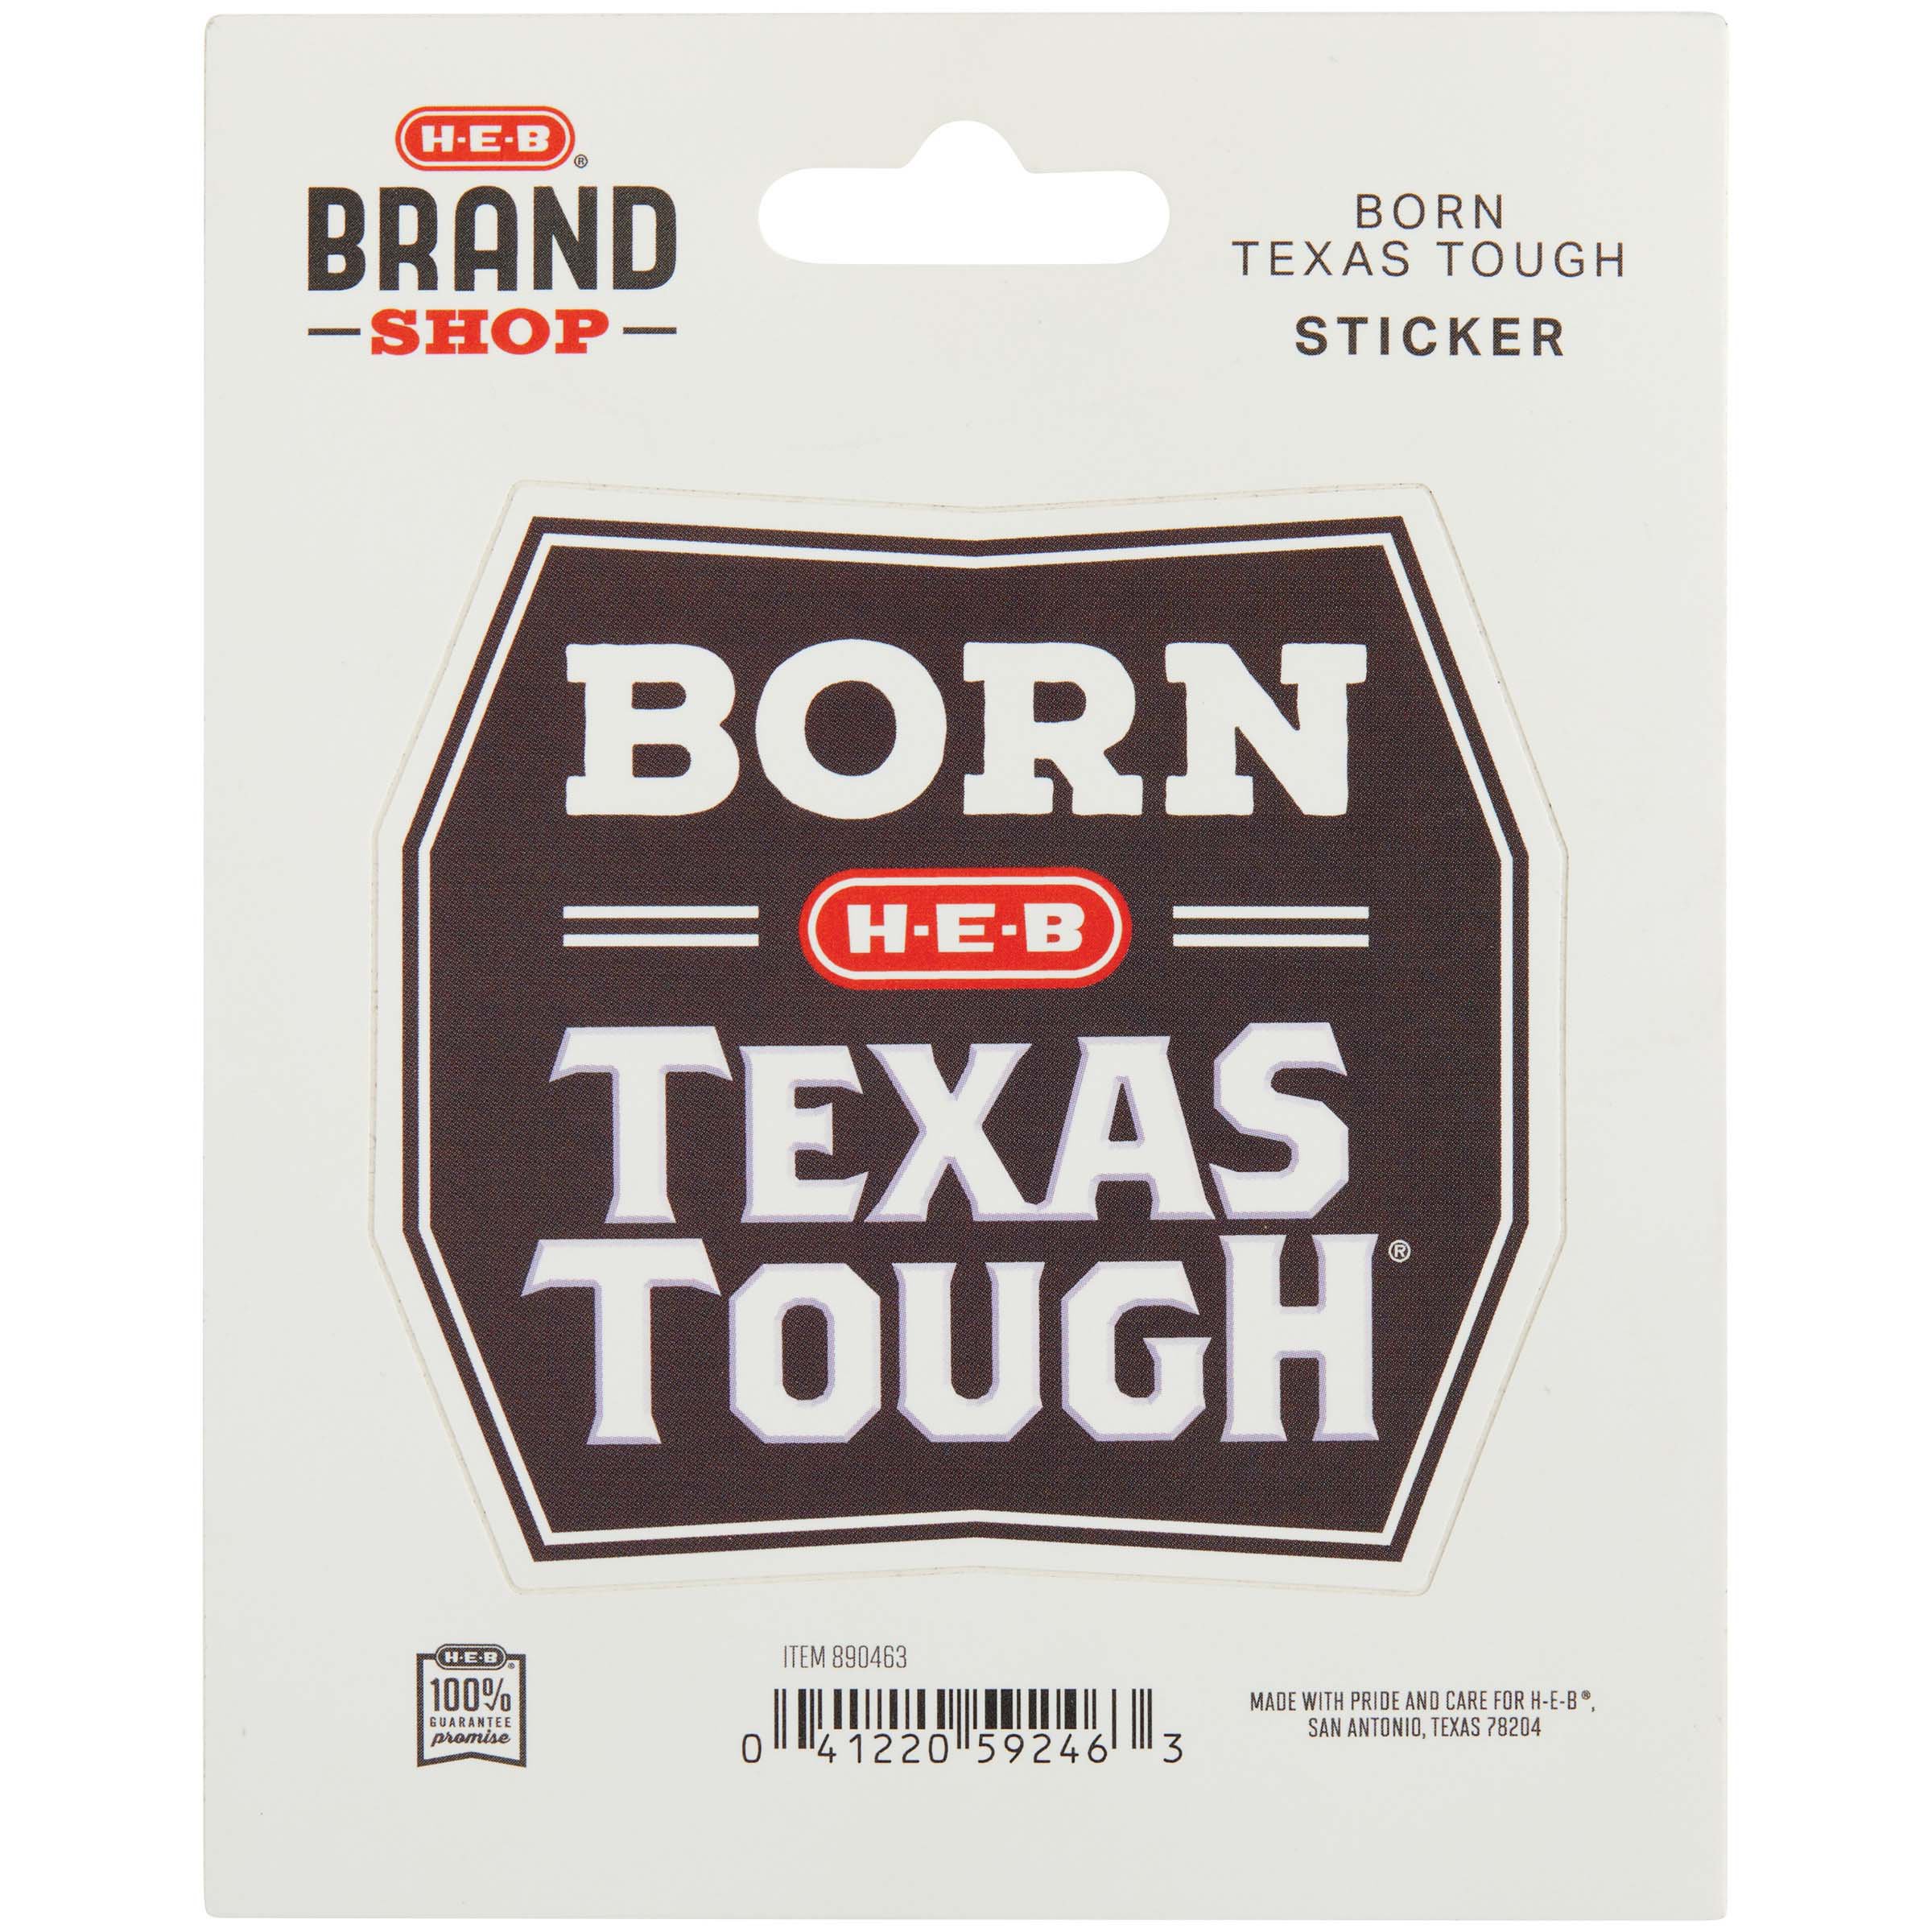 HEB Brand Shop Born Texas Tough Sticker Shop Seasonal Decor at HEB